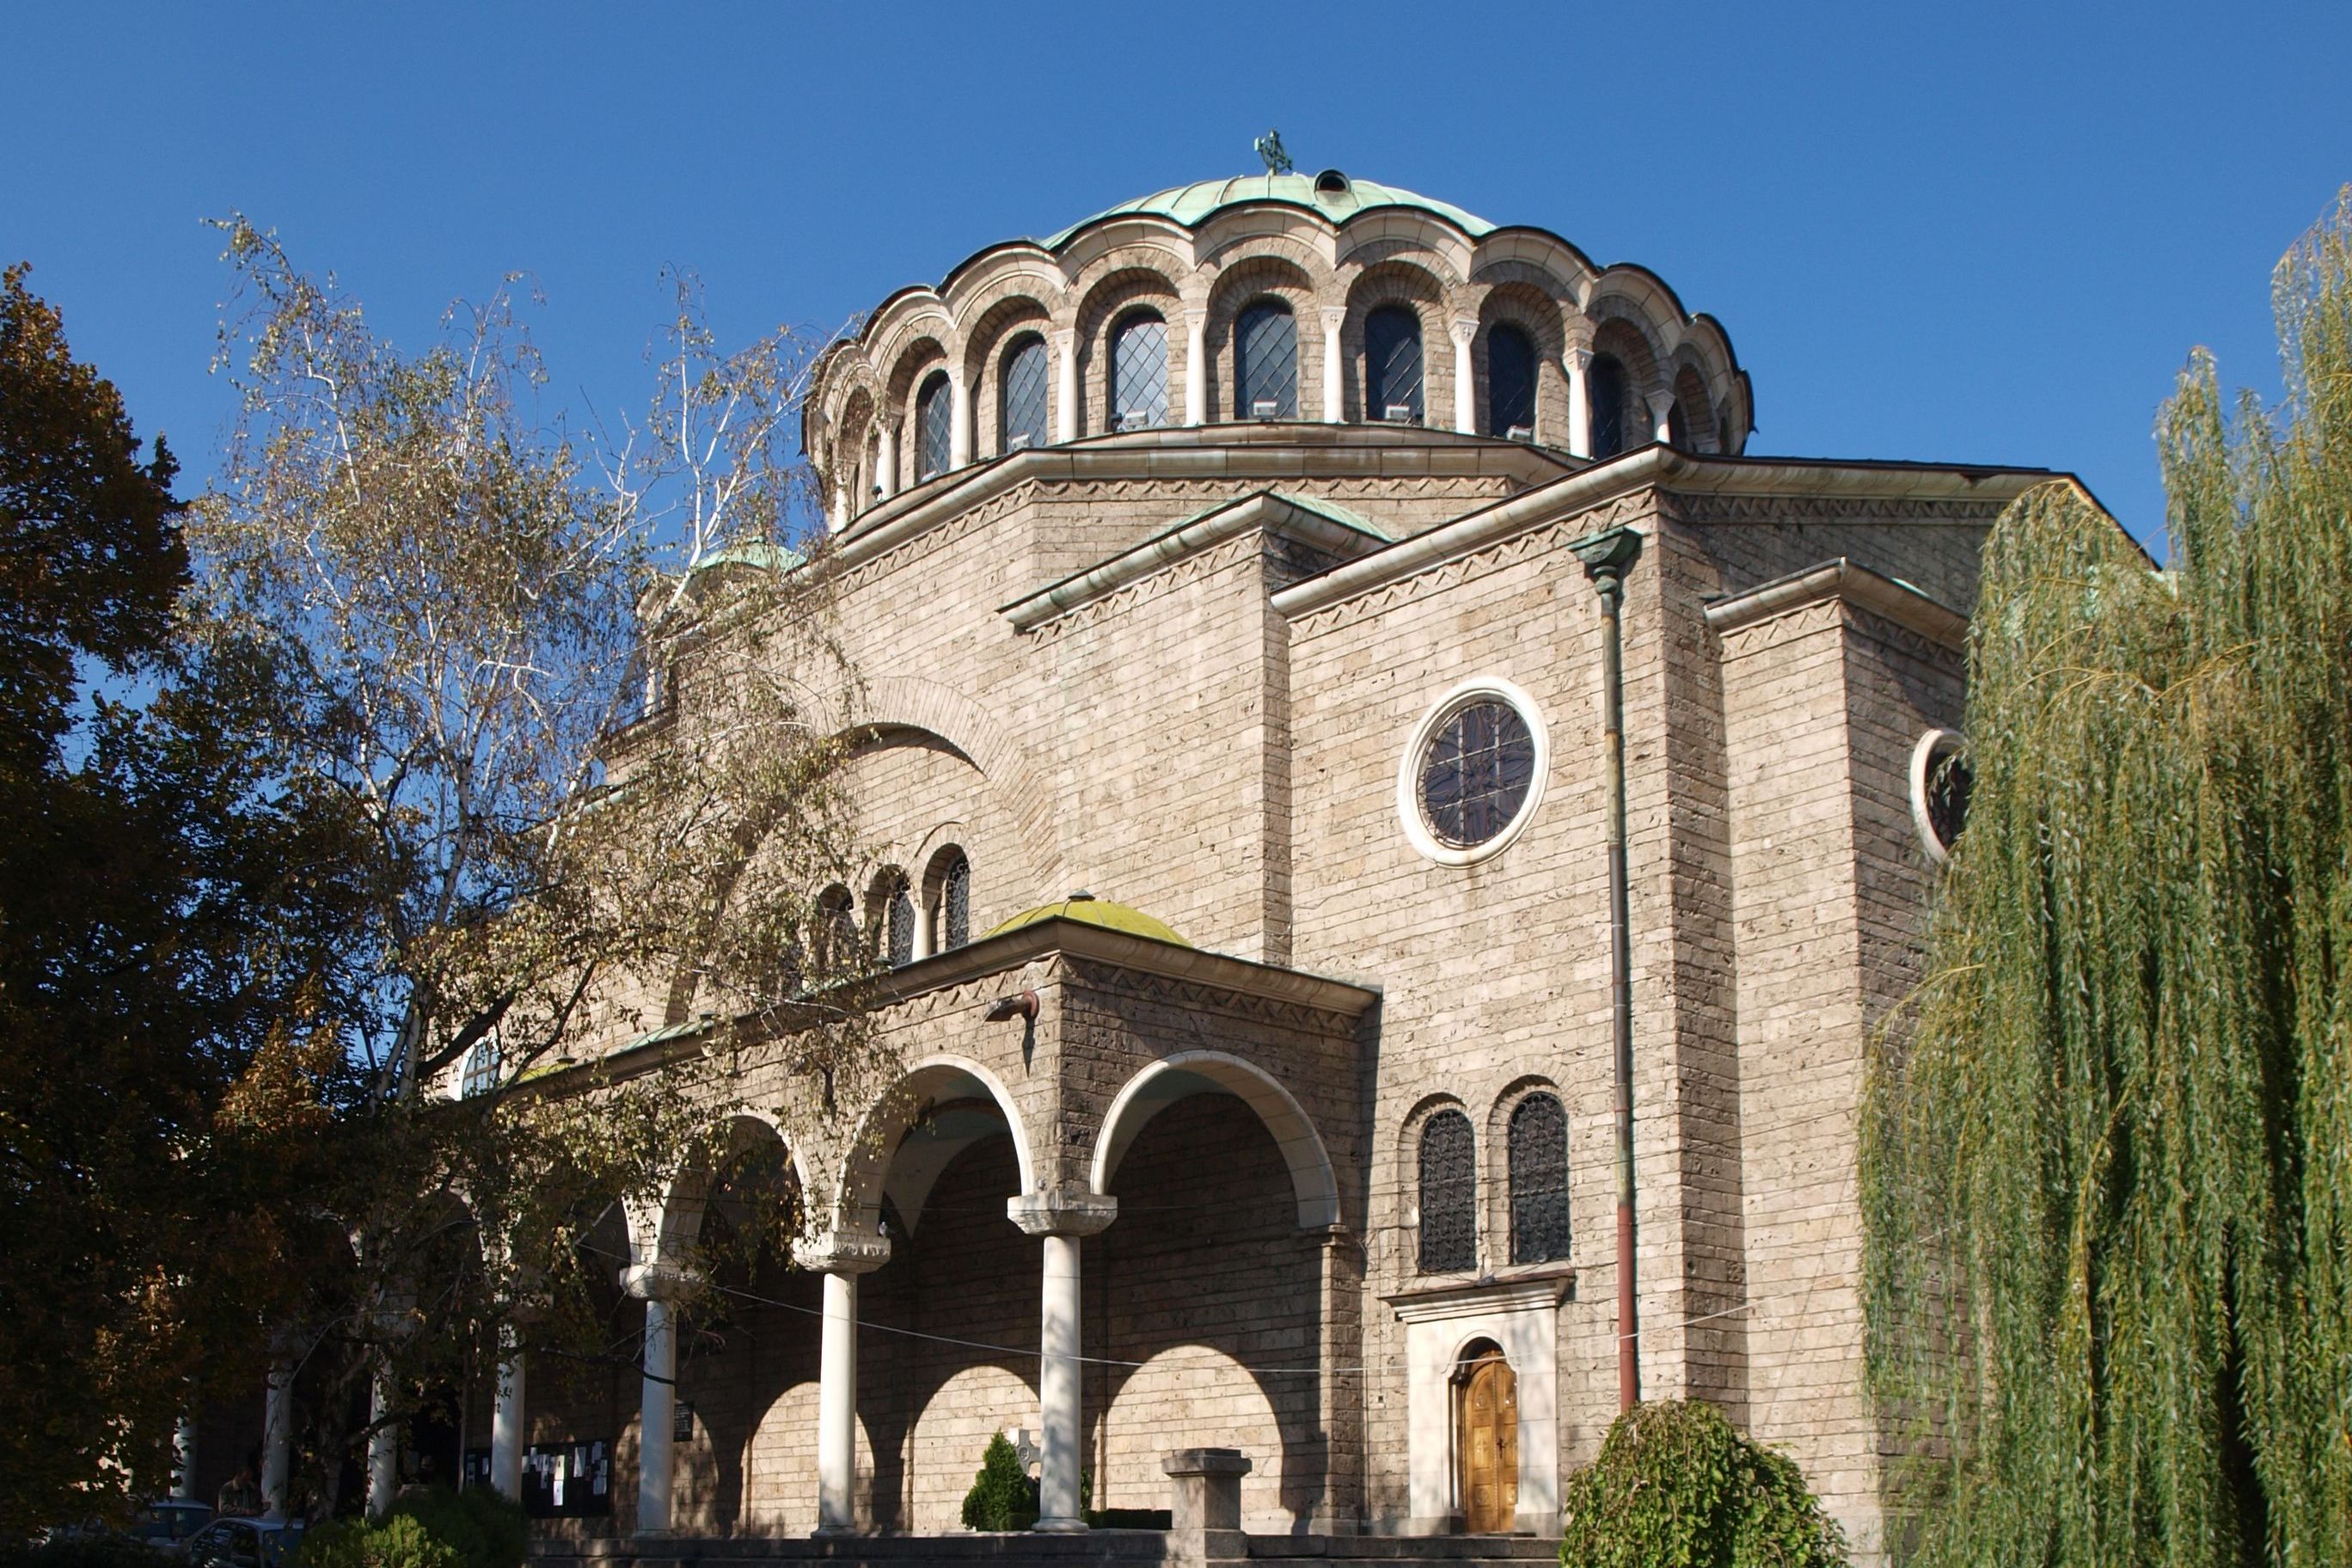 Sveta-Nedelia-Monolithic-second-biggest-Cathedral-in-Bulgaria